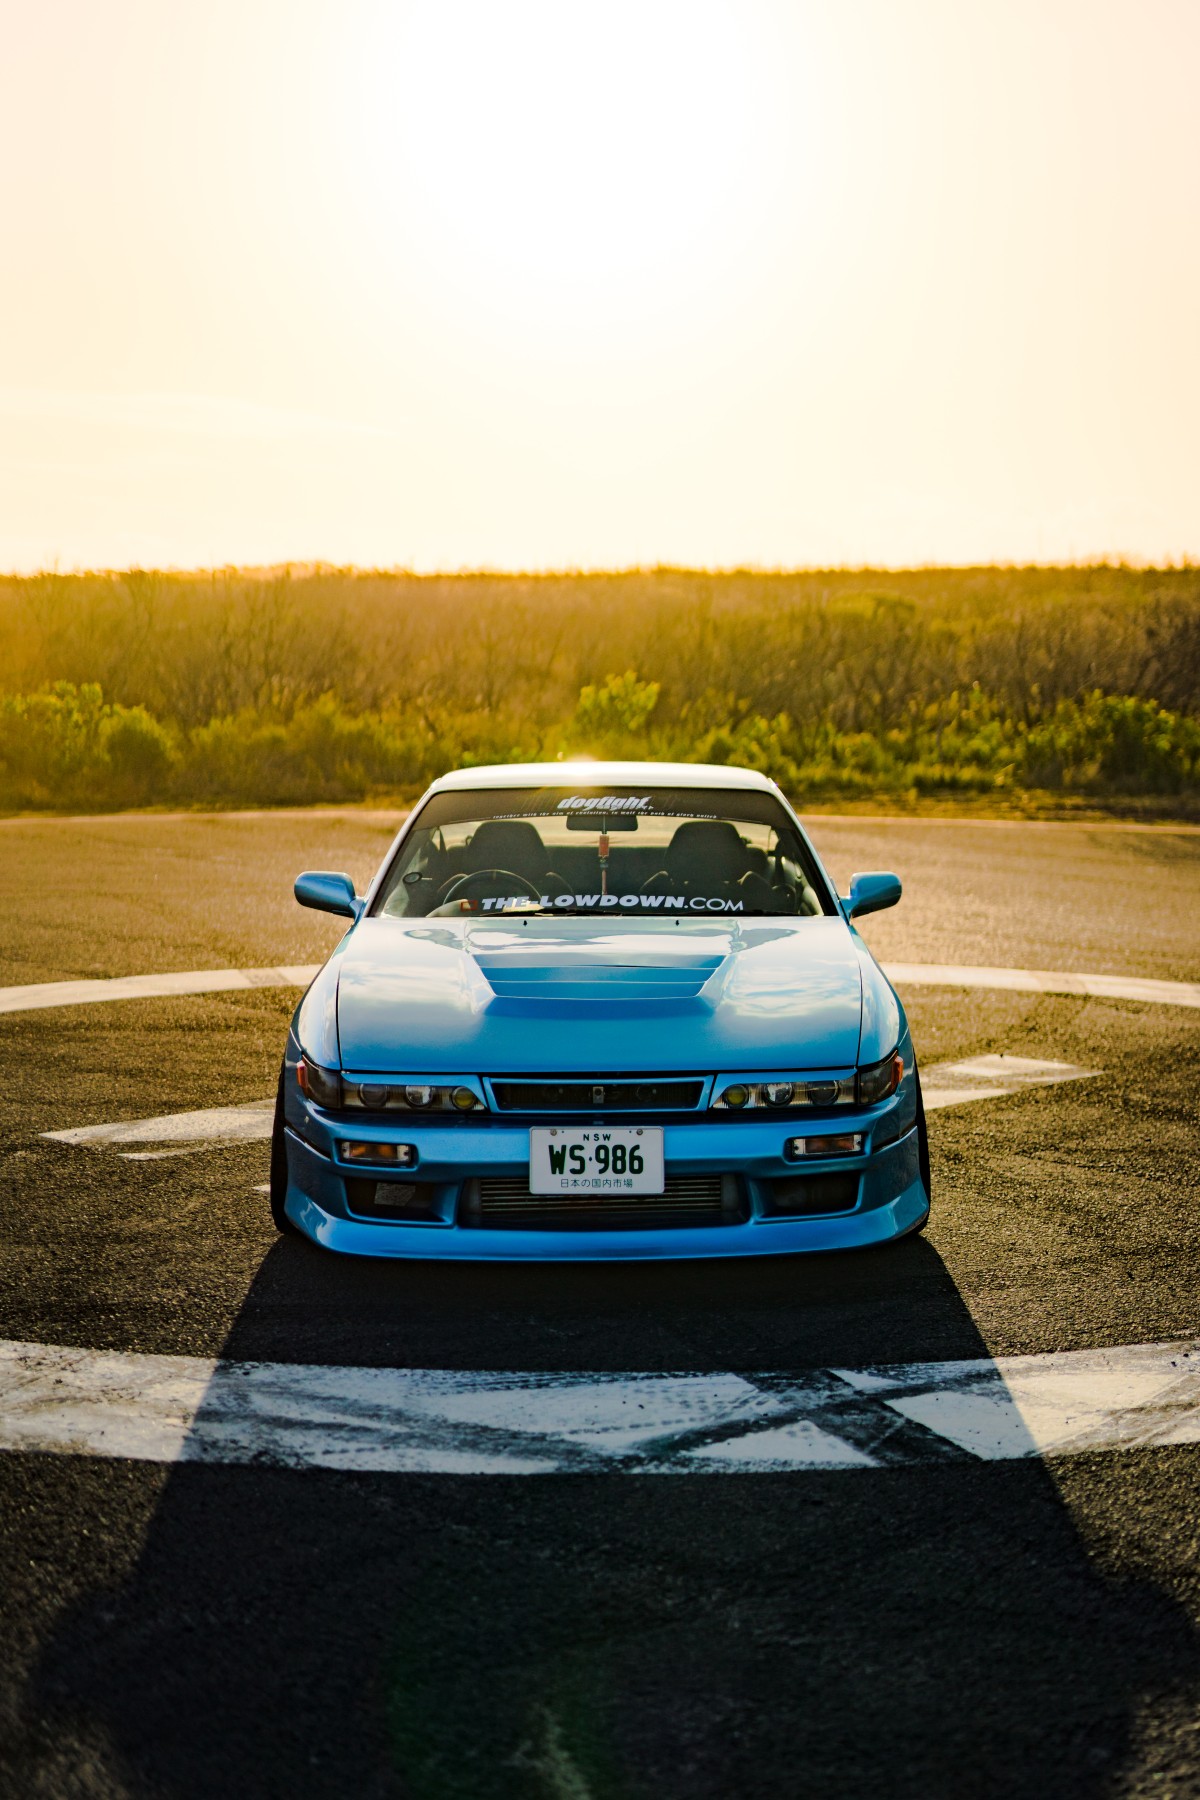 1989 Nissan S13 Silvia - BlueS13 - Shannons Club